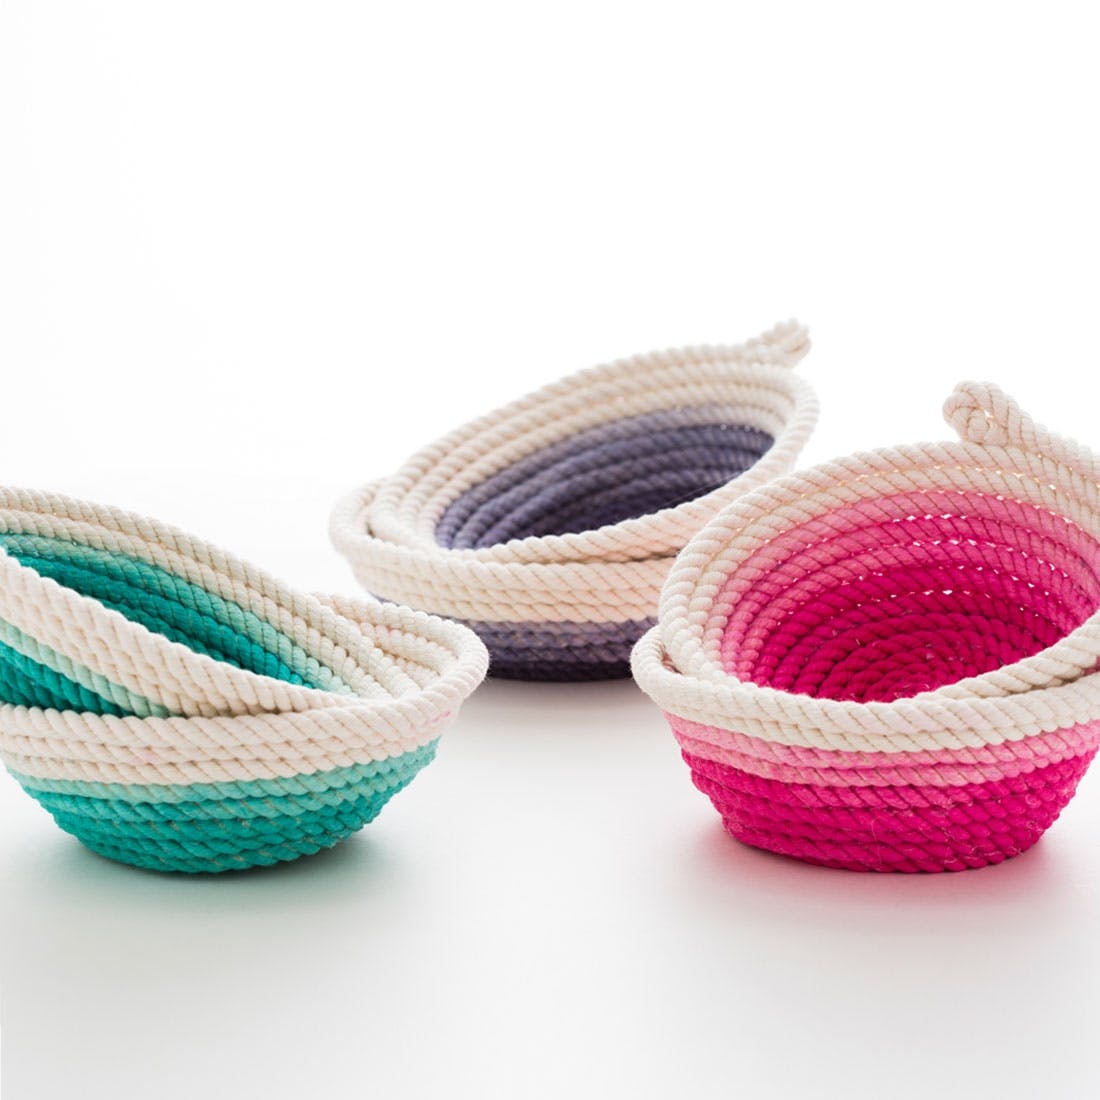 How to make DIY rope coasters - no sew!